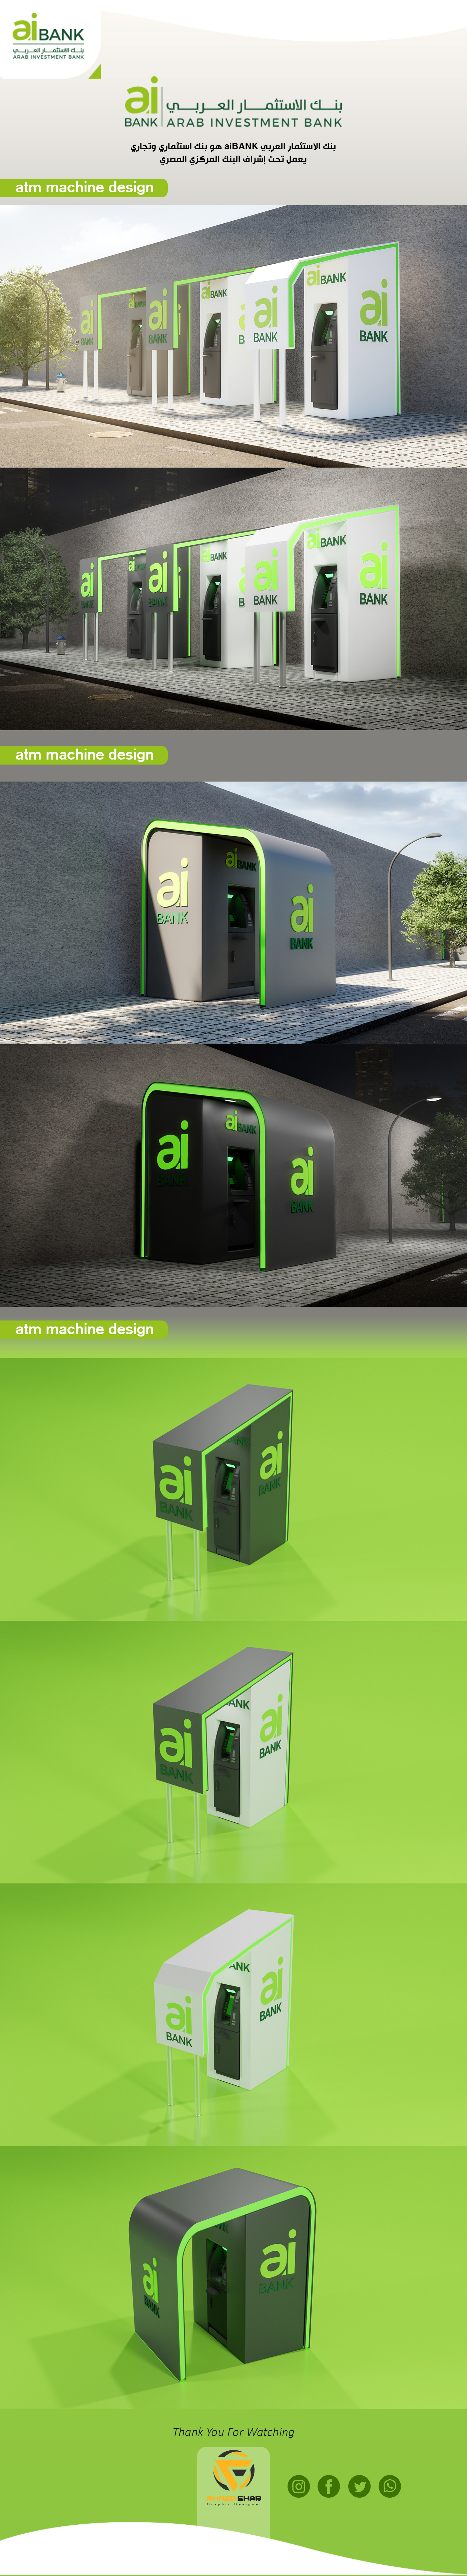 ATM Bank machine 3D modern Render Street Advertising  Graphic Designer Aibank